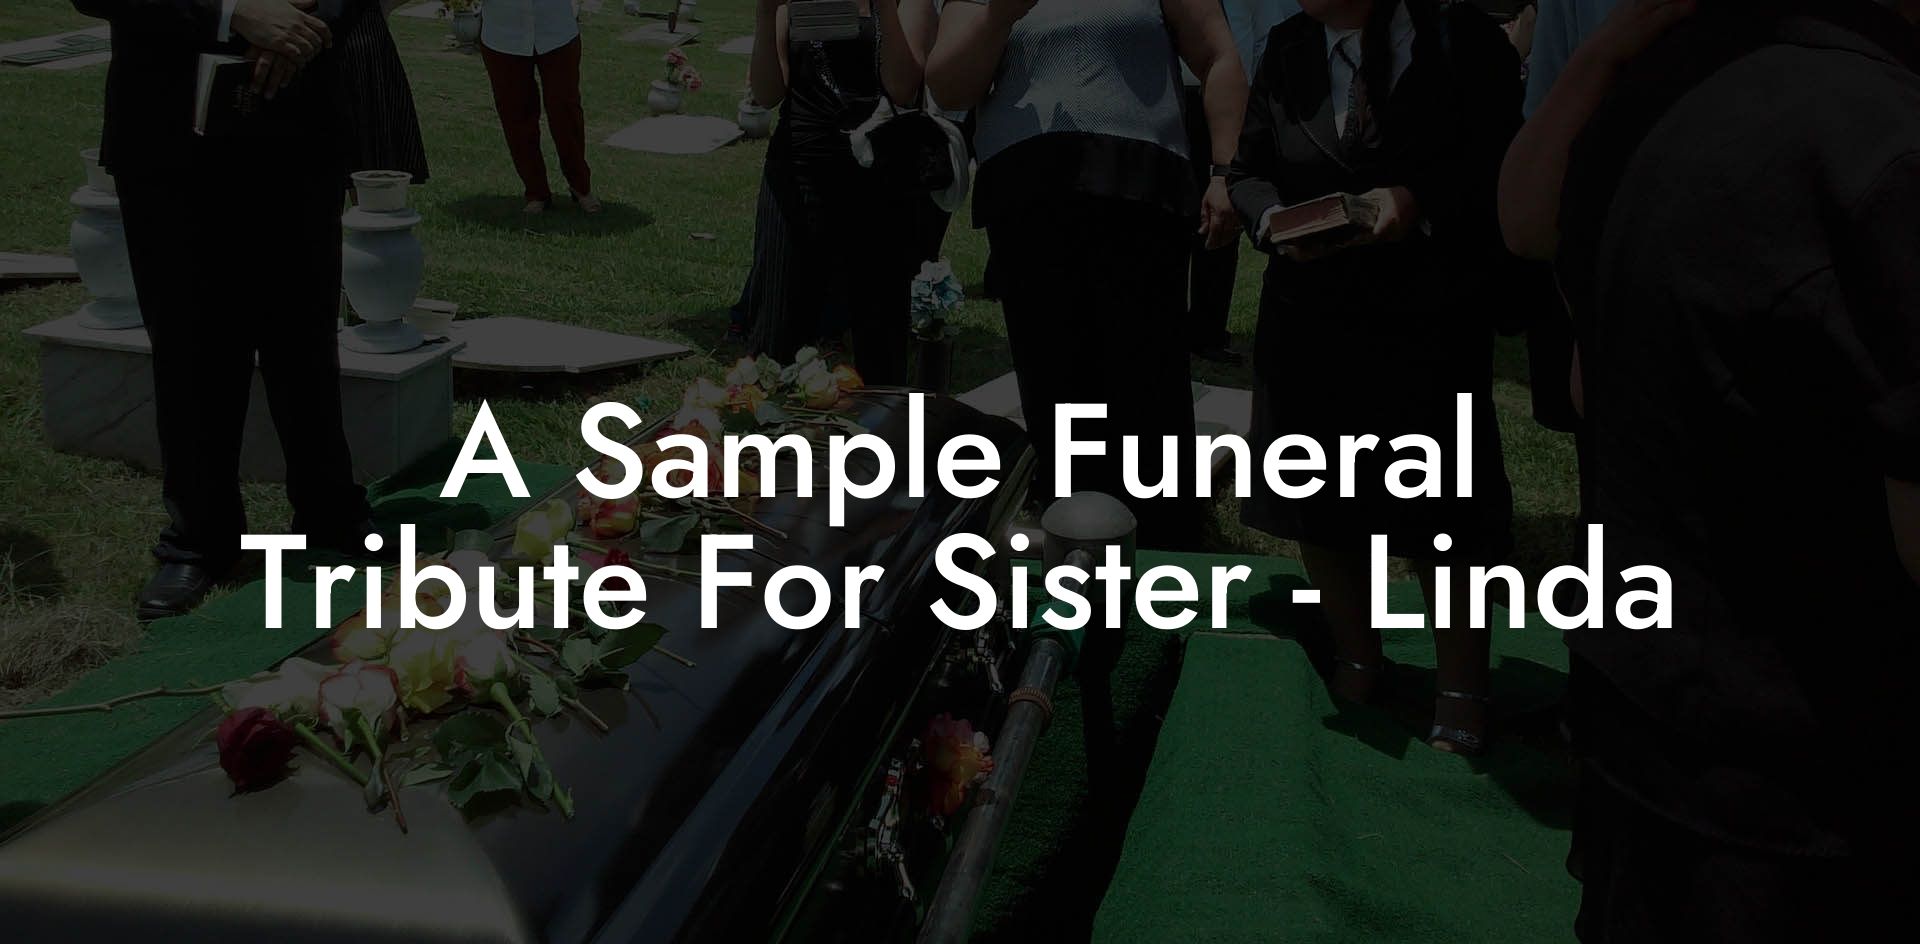 A Sample Funeral Tribute For Sister - Linda